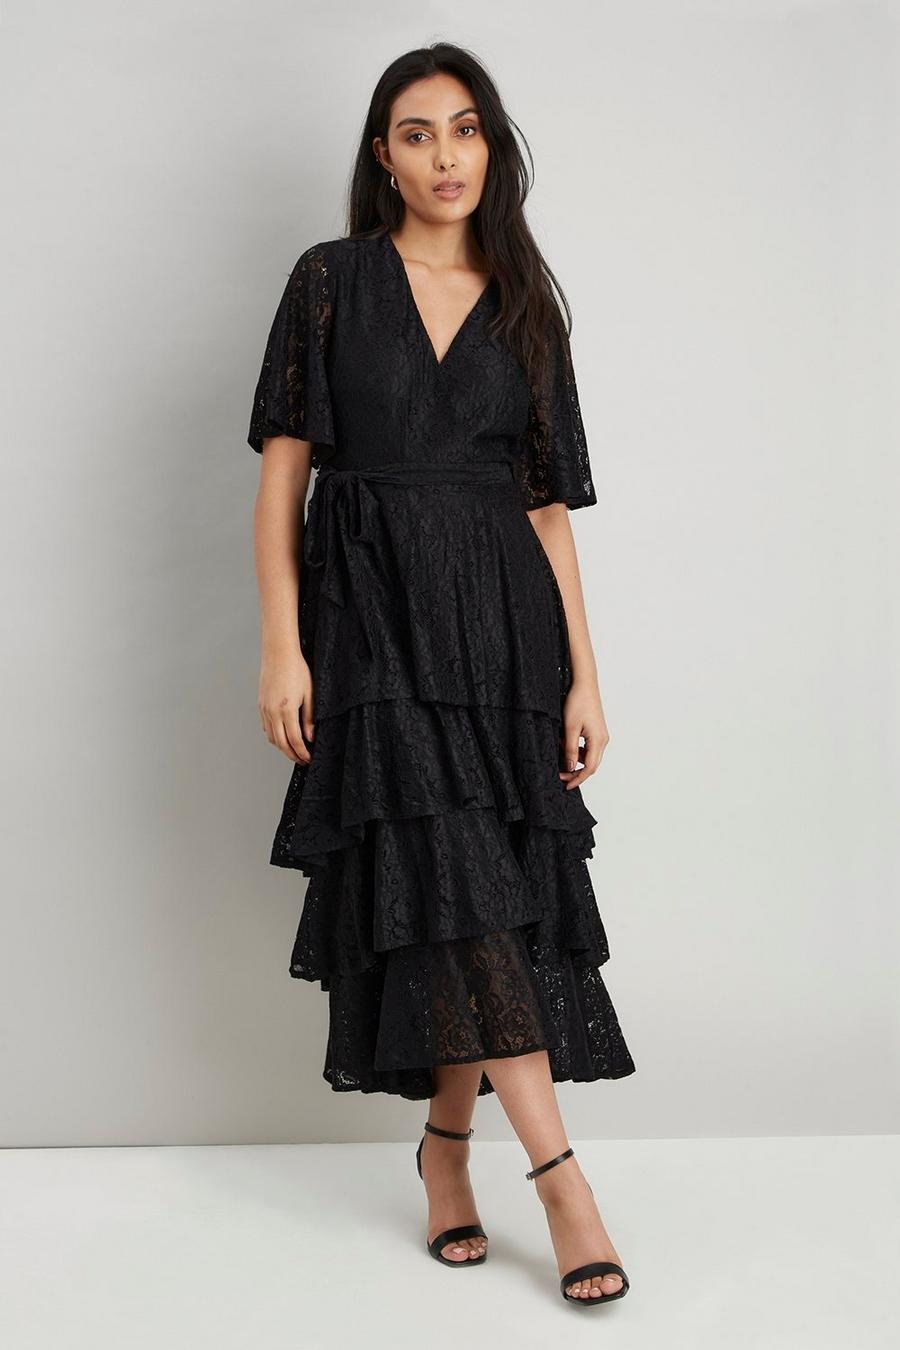 Petite Black Lace Triple Tiered Dress